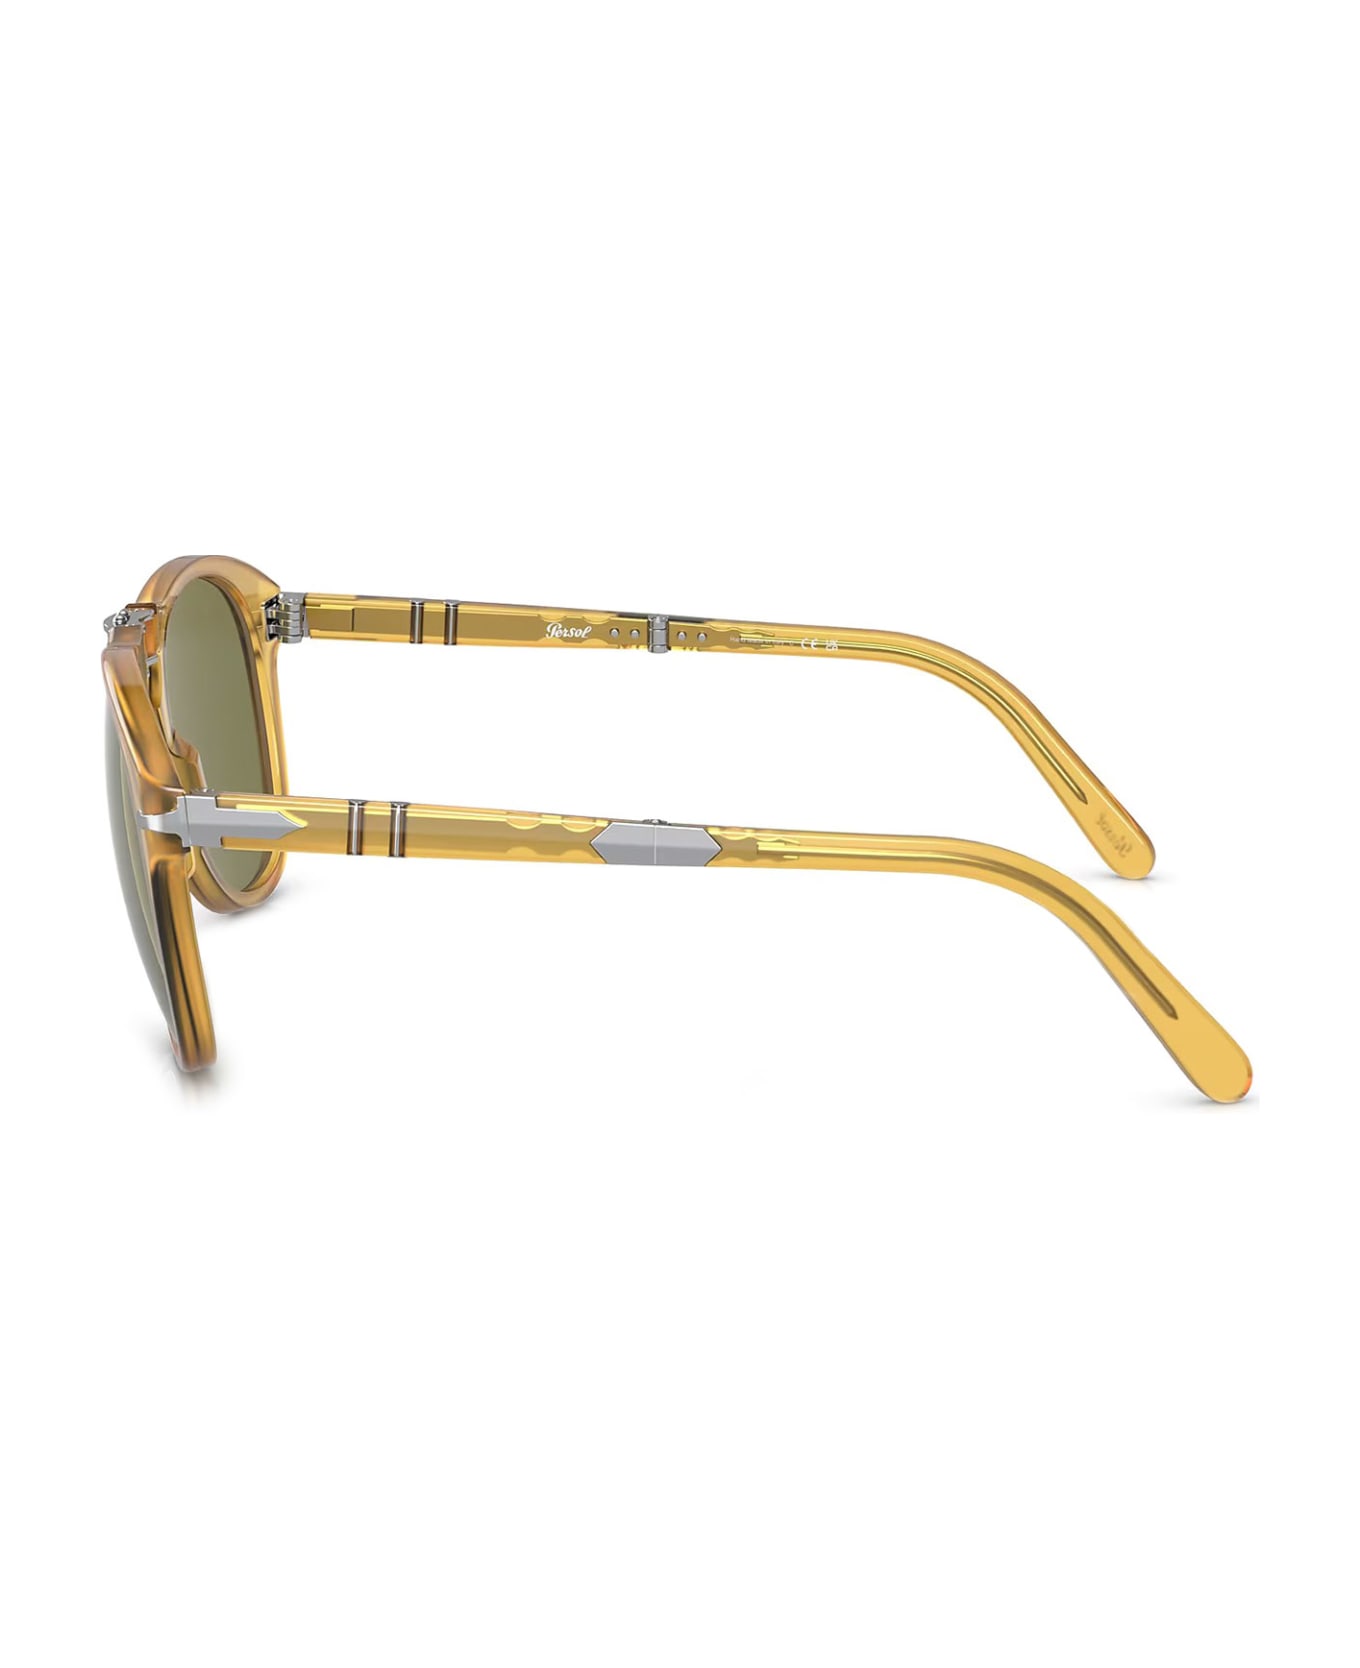 Persol Po0714sm Opal Yellow Sunglasses - Opal Yellow サングラス